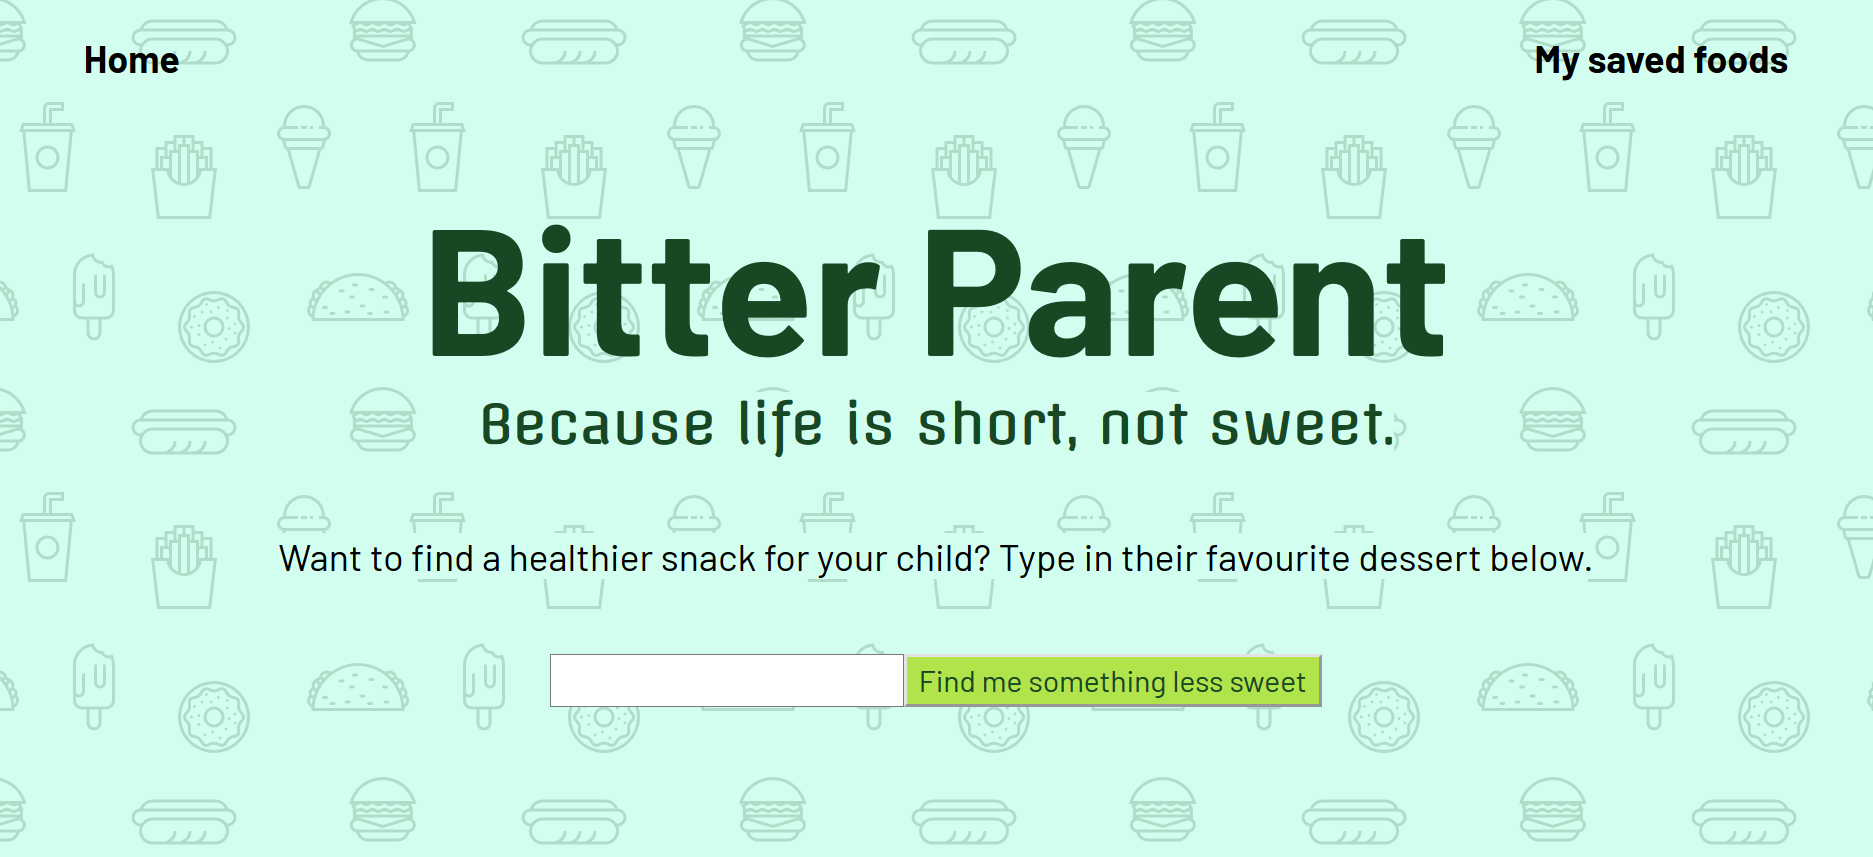 A screenshot of a nutrition information comparison app called Bitter Parent